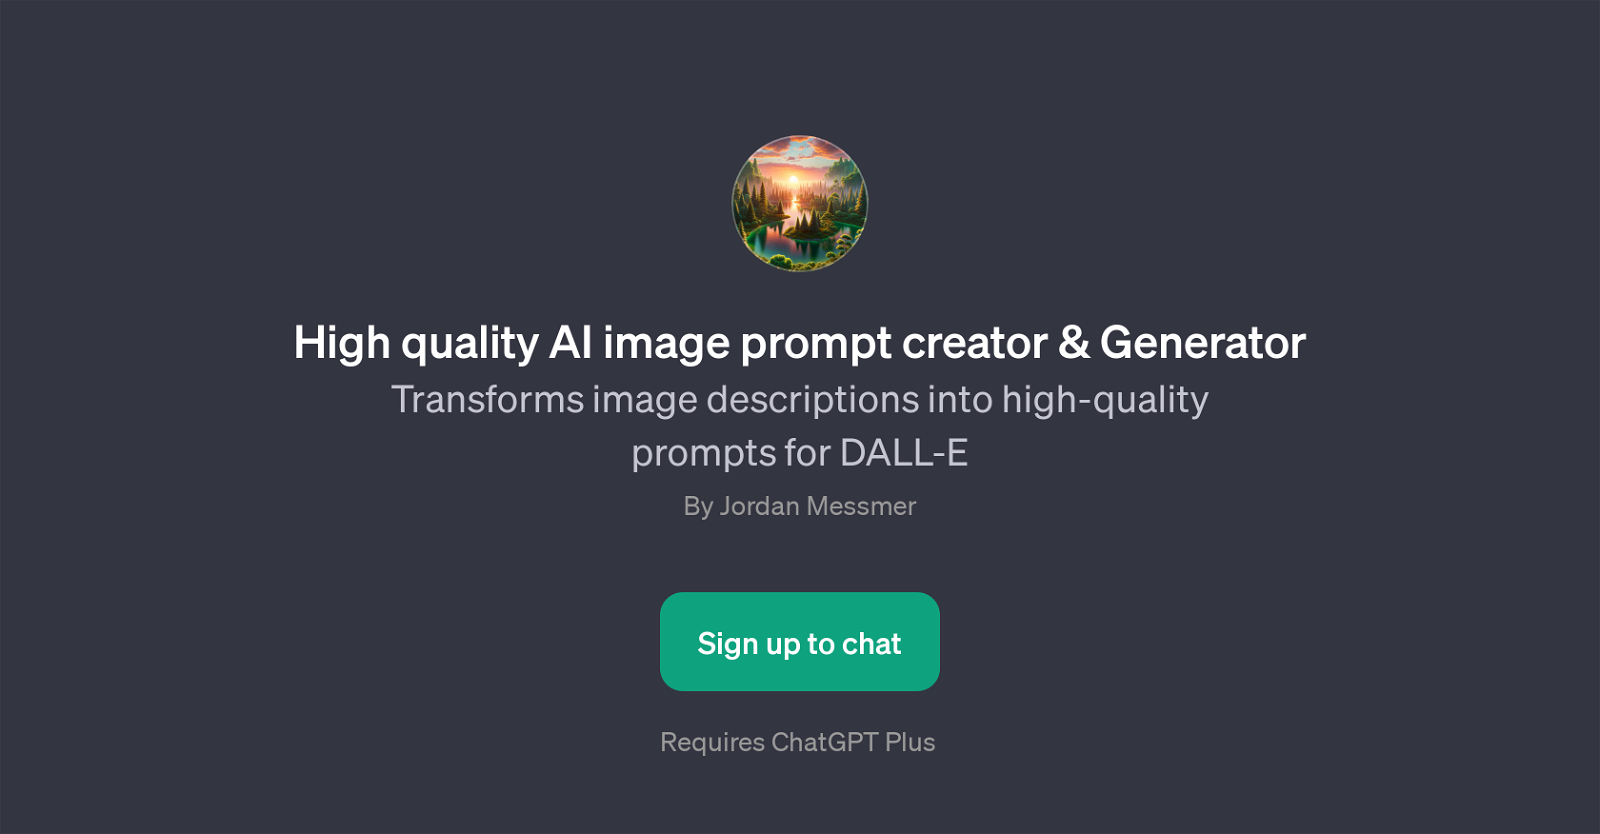 High quality AI image prompt creator & Generator website